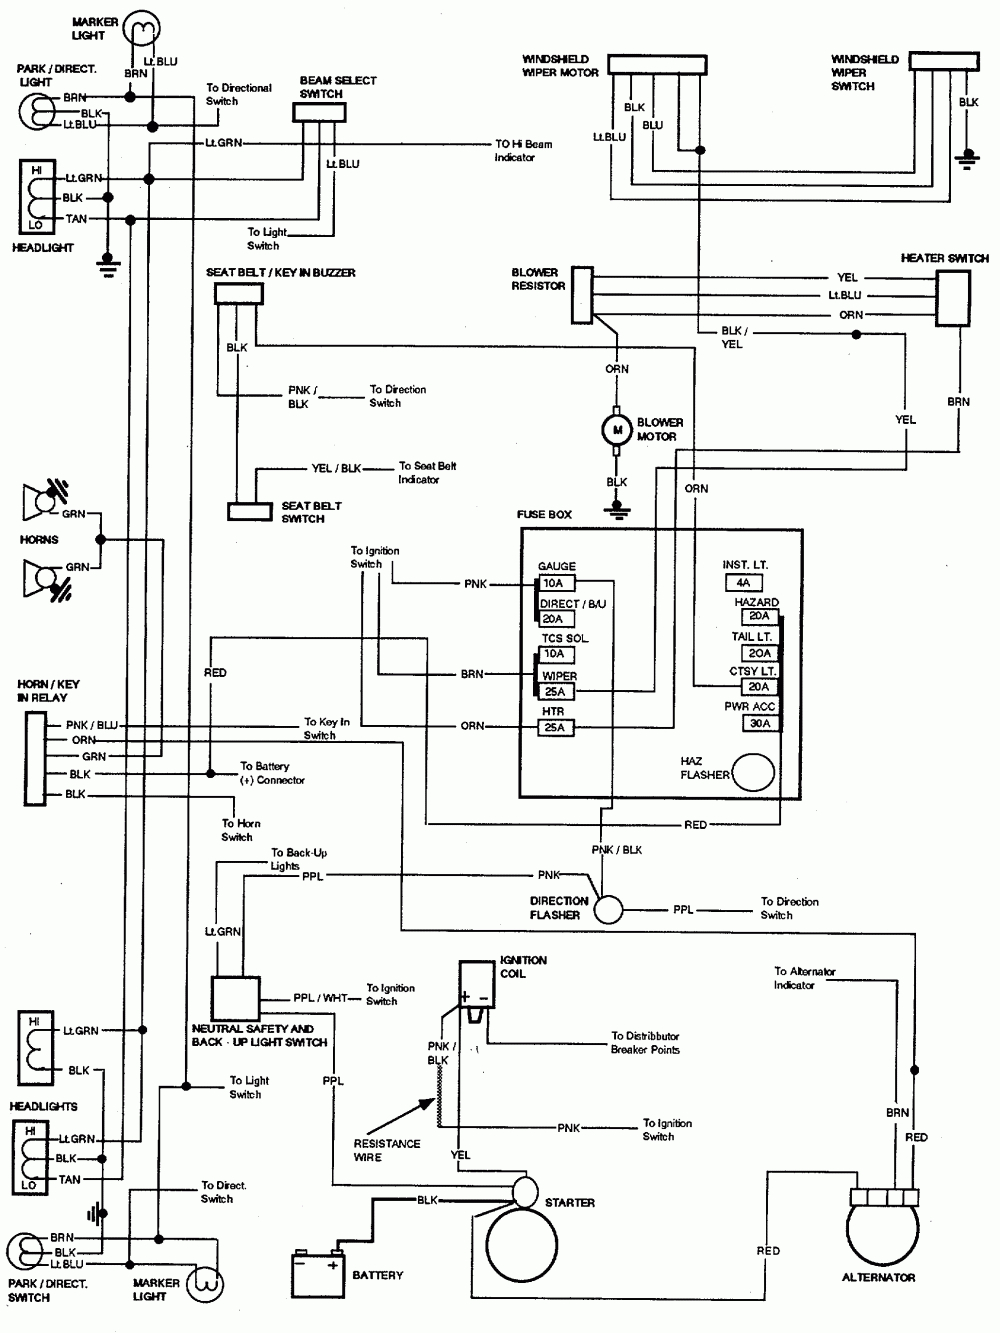 Repair Guides | Wiring Diagrams | Wiring Diagrams | Autozone - Power Window Wiring Diagram Chevy